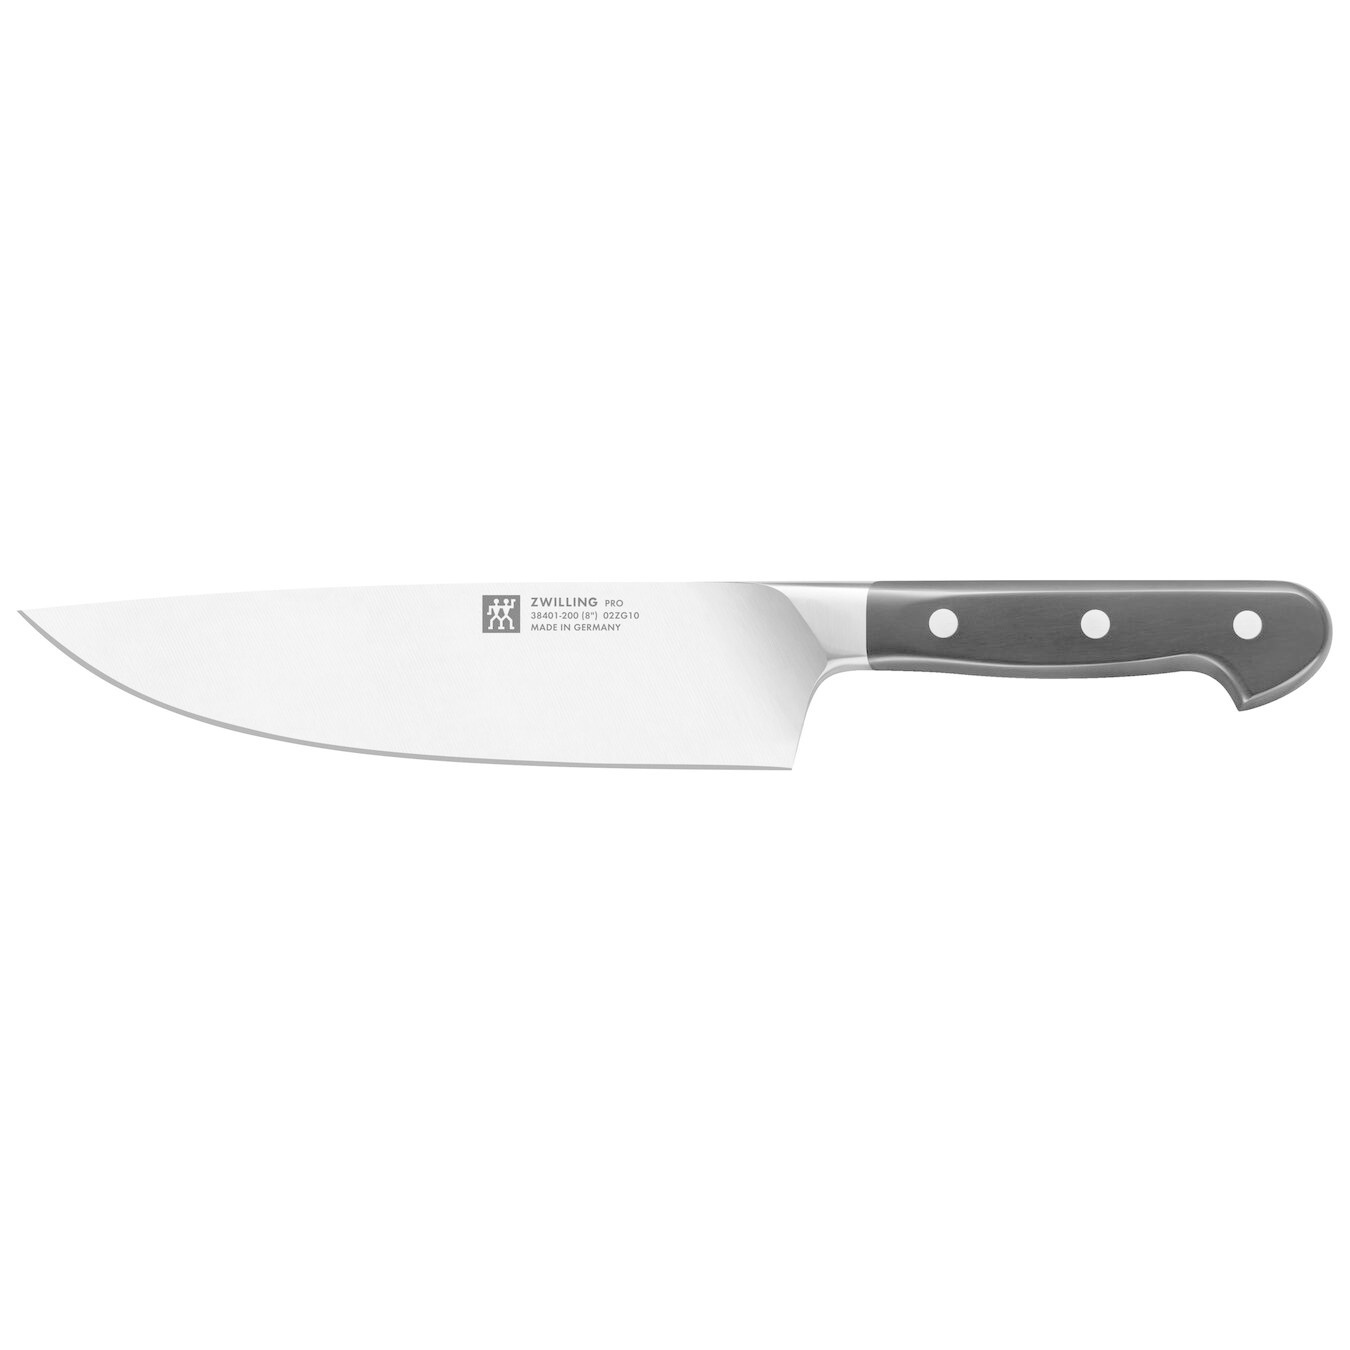 https://cdn.shoplightspeed.com/shops/617932/files/51549790/zwilling-pro-8-chefs-knife.jpg